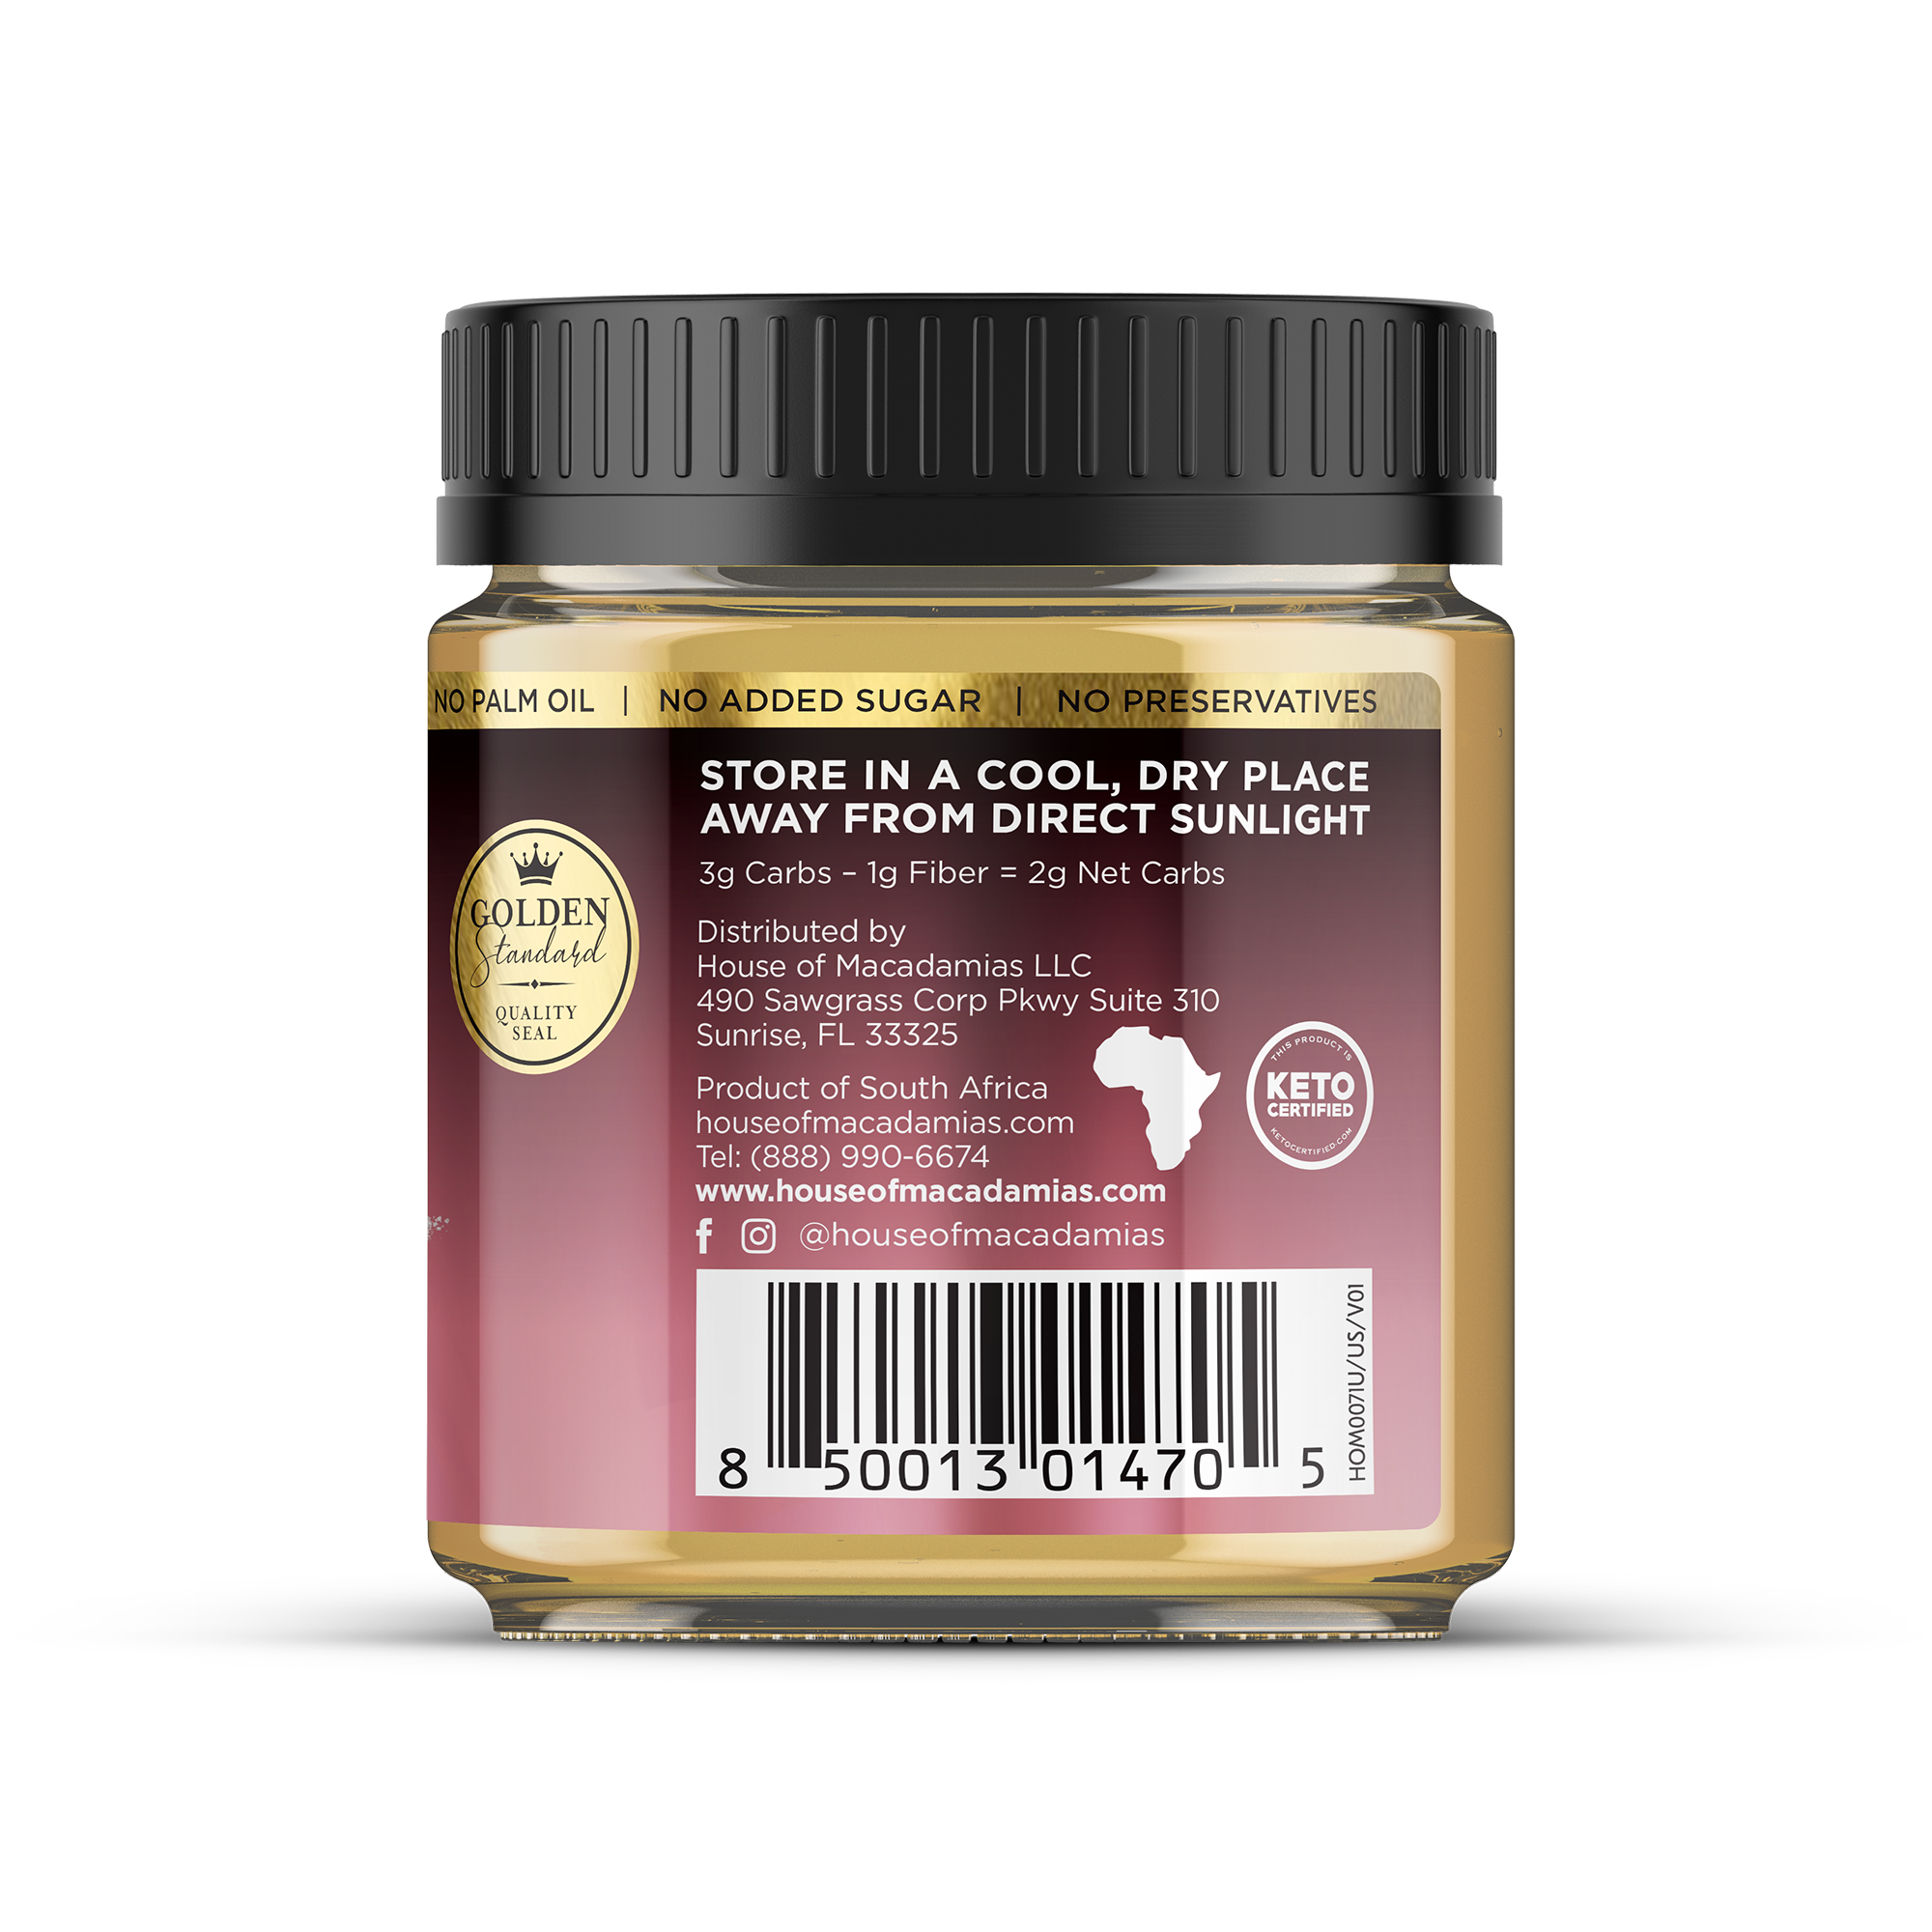 Macadamia Nut Butter – Sea Salt (250g)